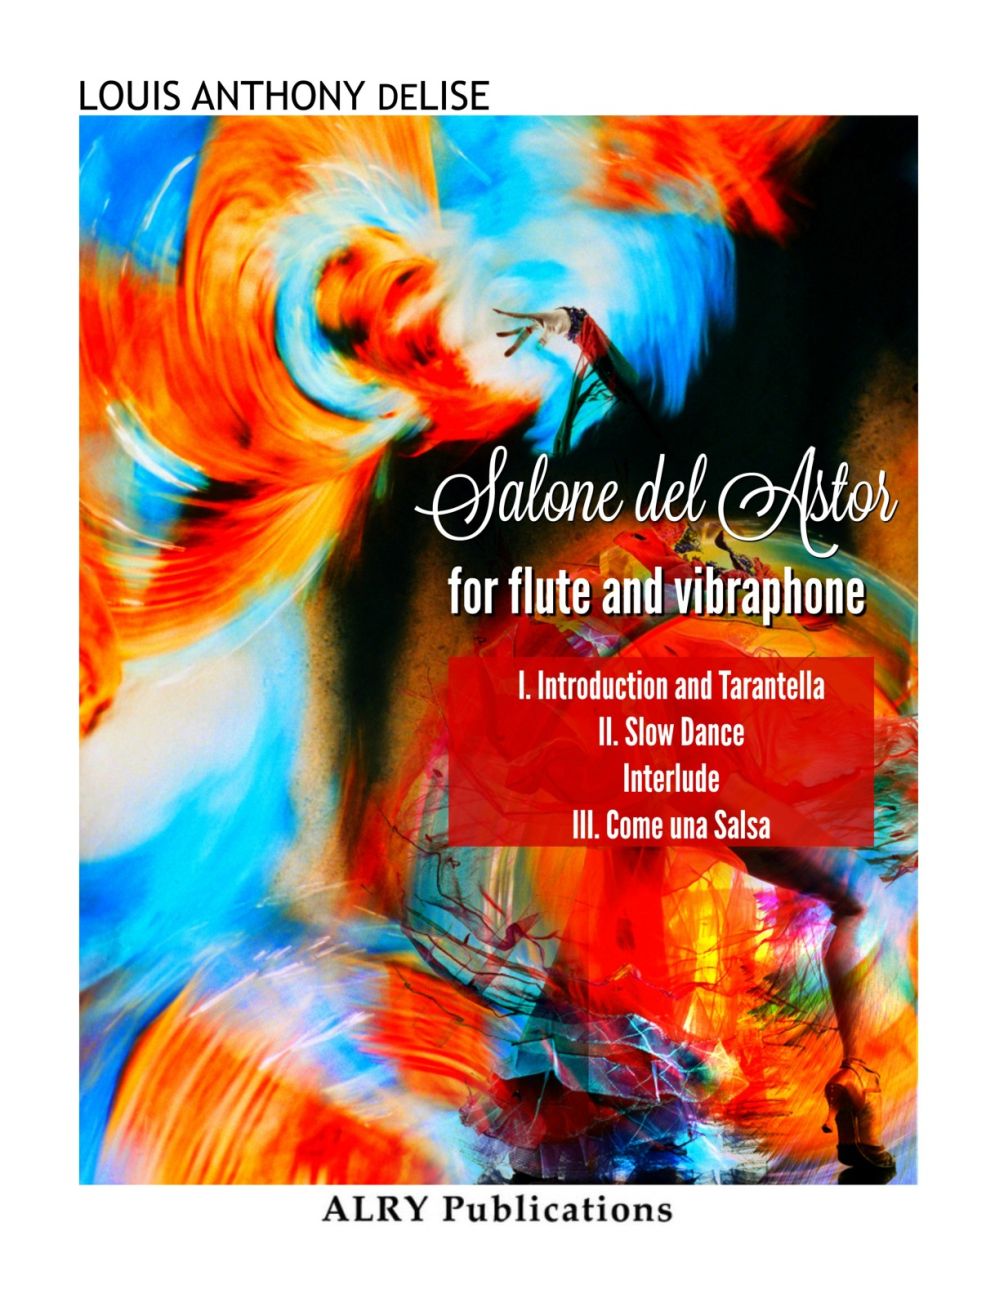 Salone Del Astor For Flute And Vibraphone (DELISE LOUIS)